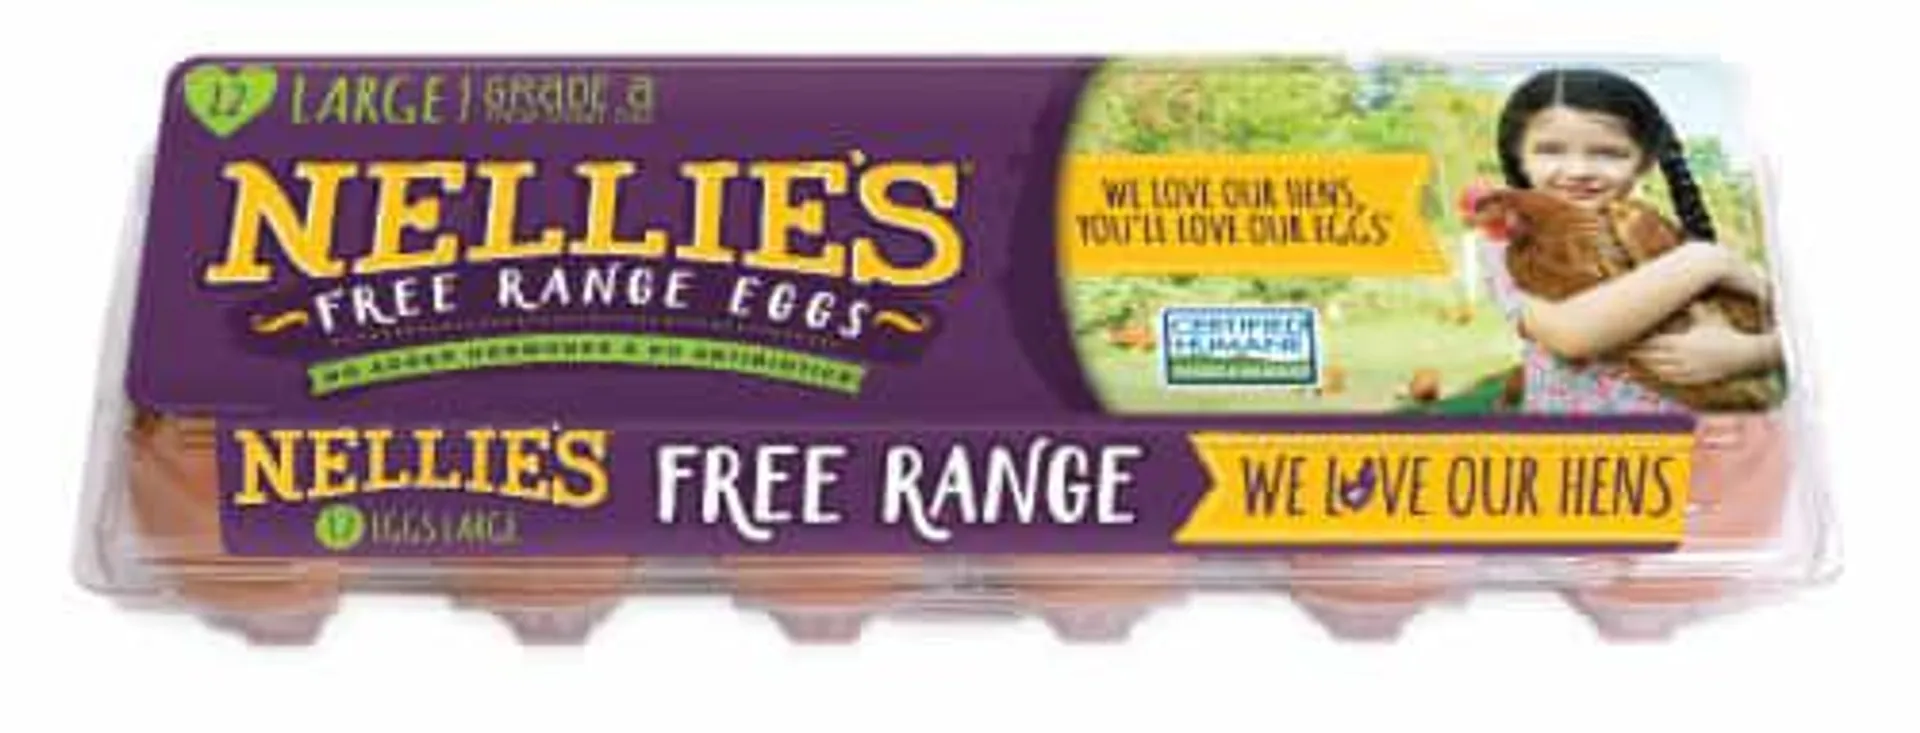 Nellie's Free Range Large Eggs